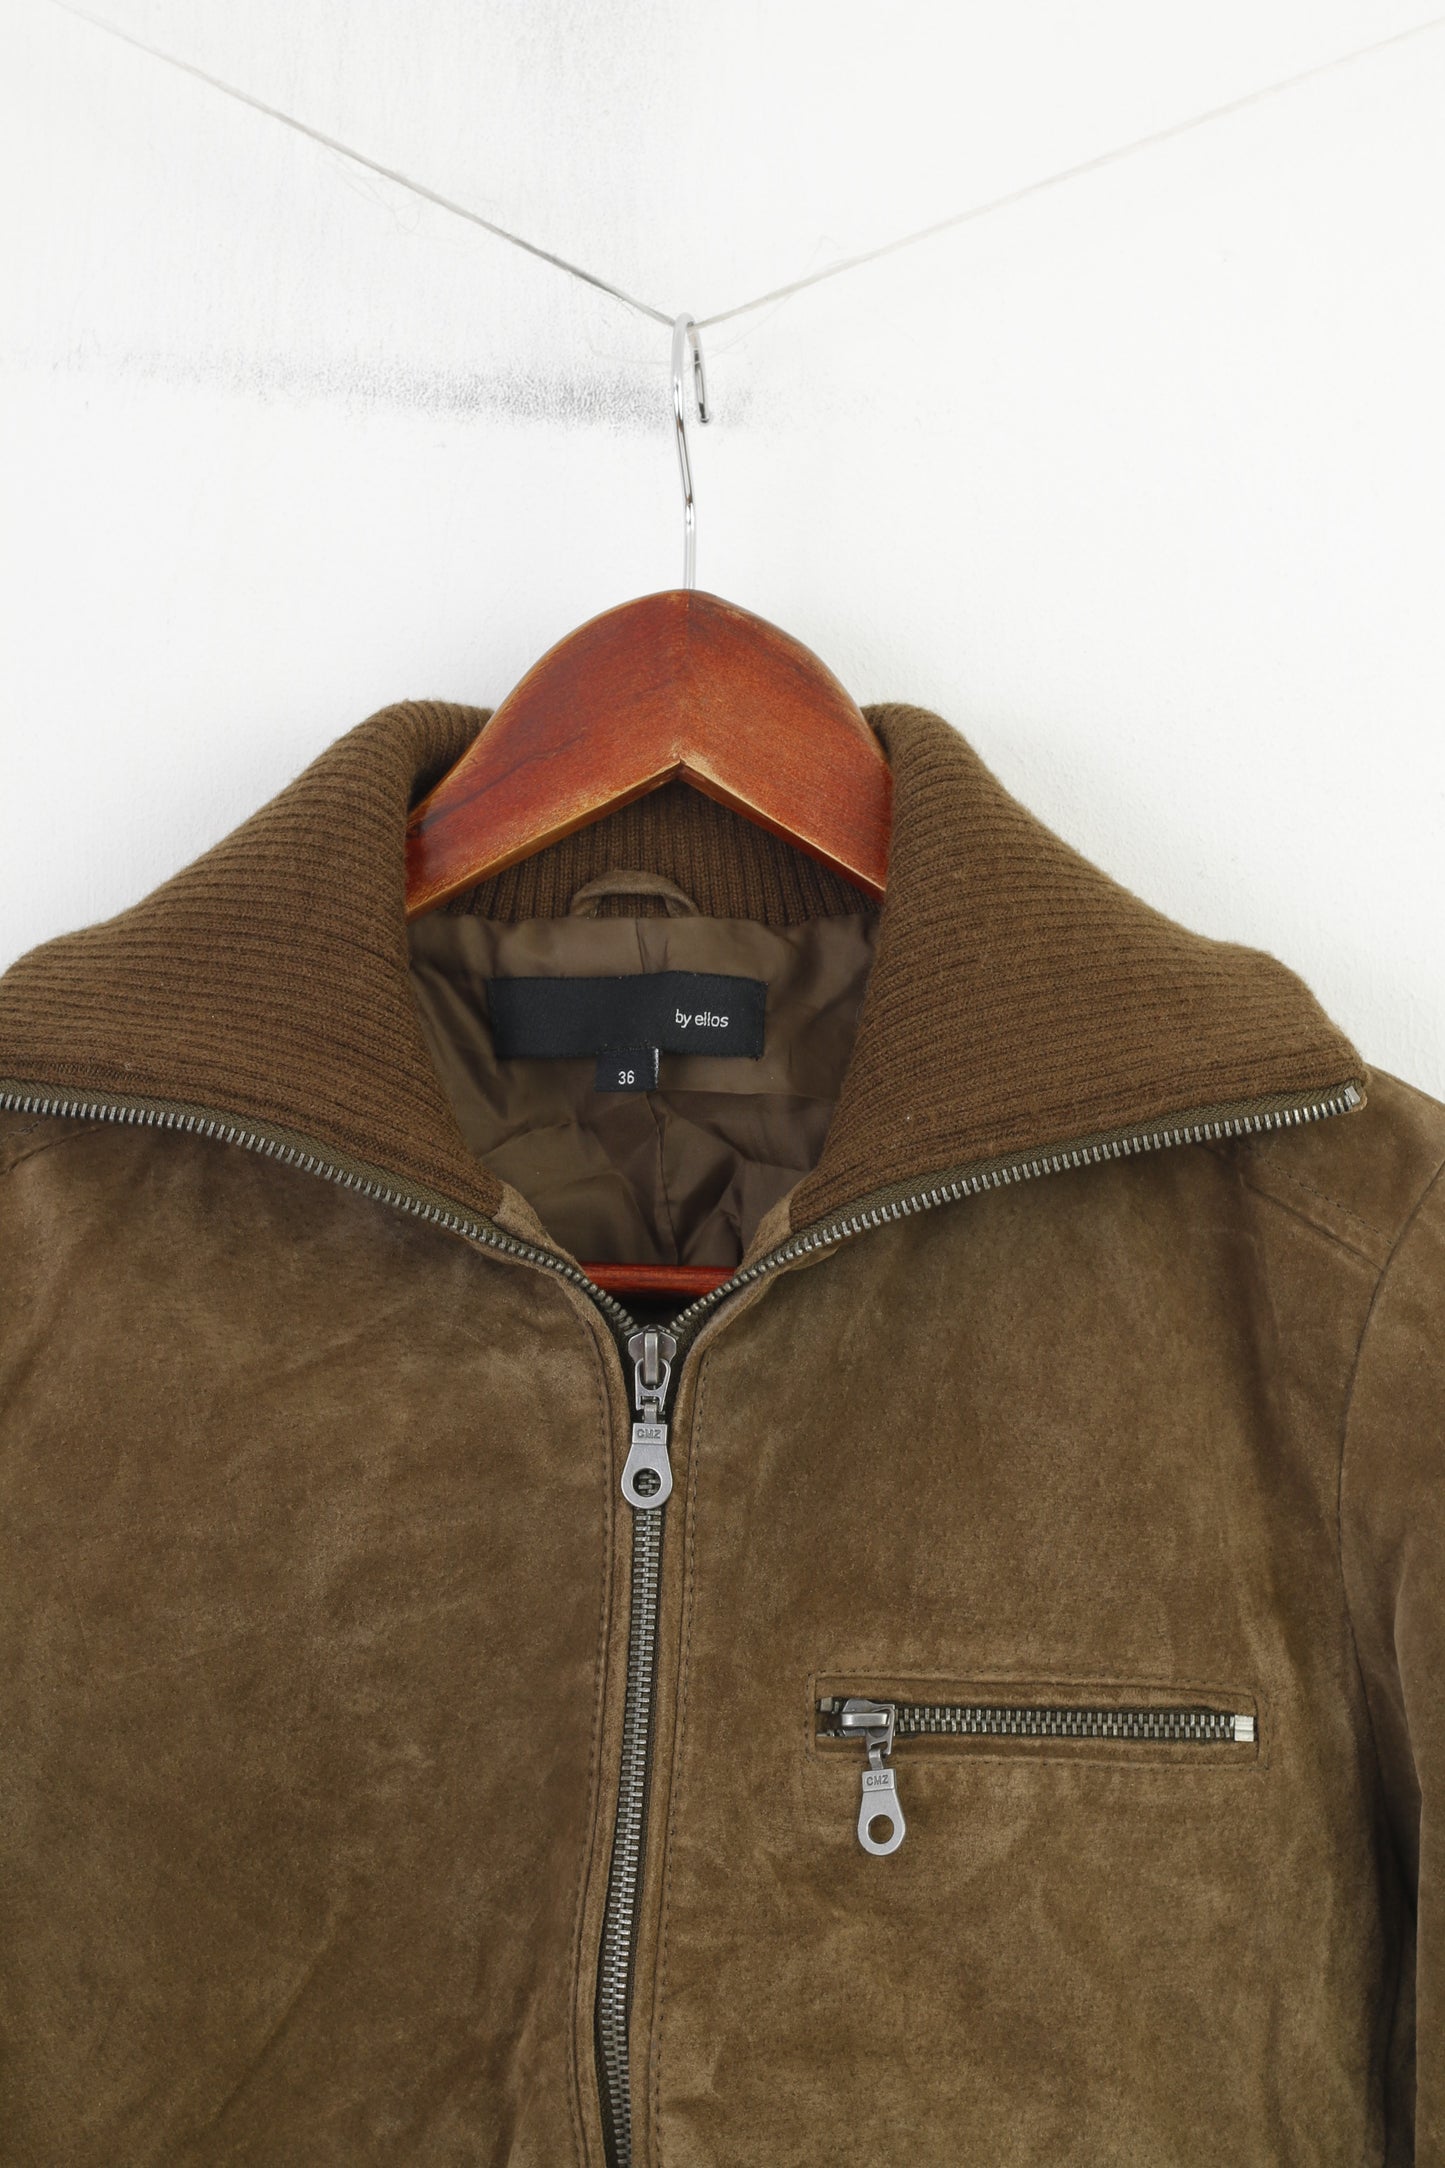 By Ellos Women 36 S Leather Jacket Brown Suede Pockets Full Zipper Biker Retro Collar Vintage Top